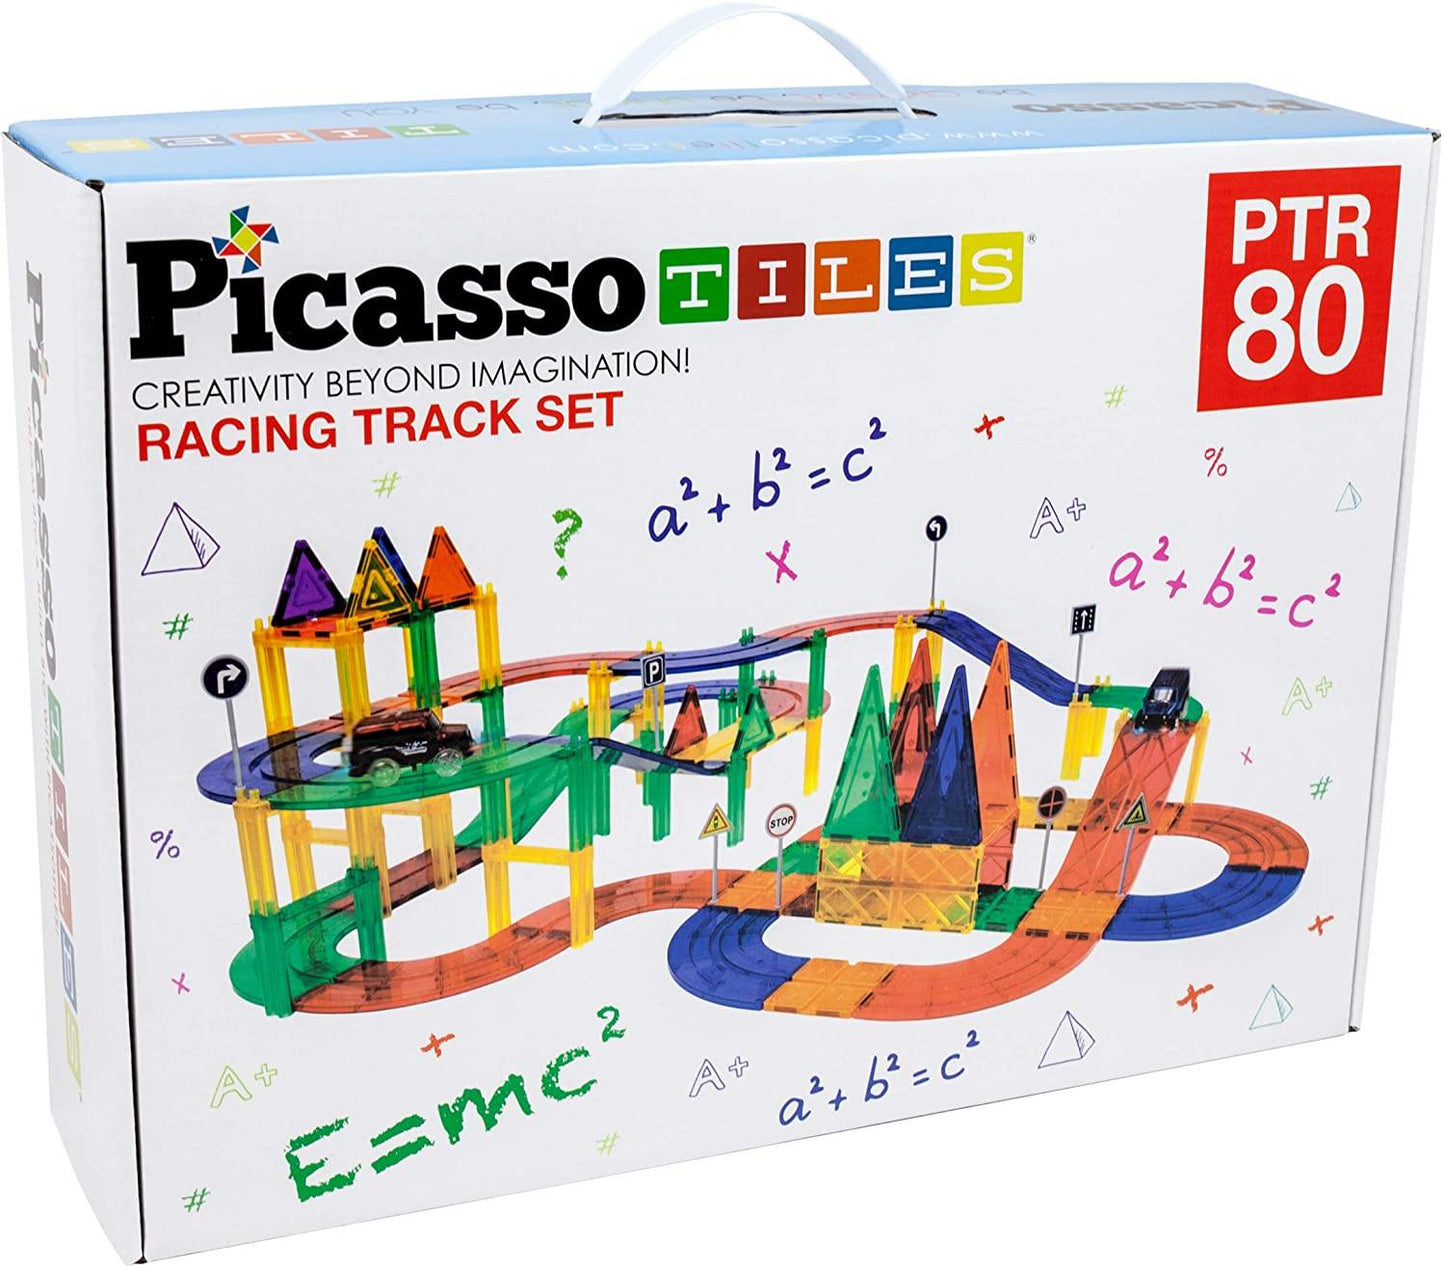 PicassoTiles 80 Piece Race Track Set - ECOBUNS BABY + CO.